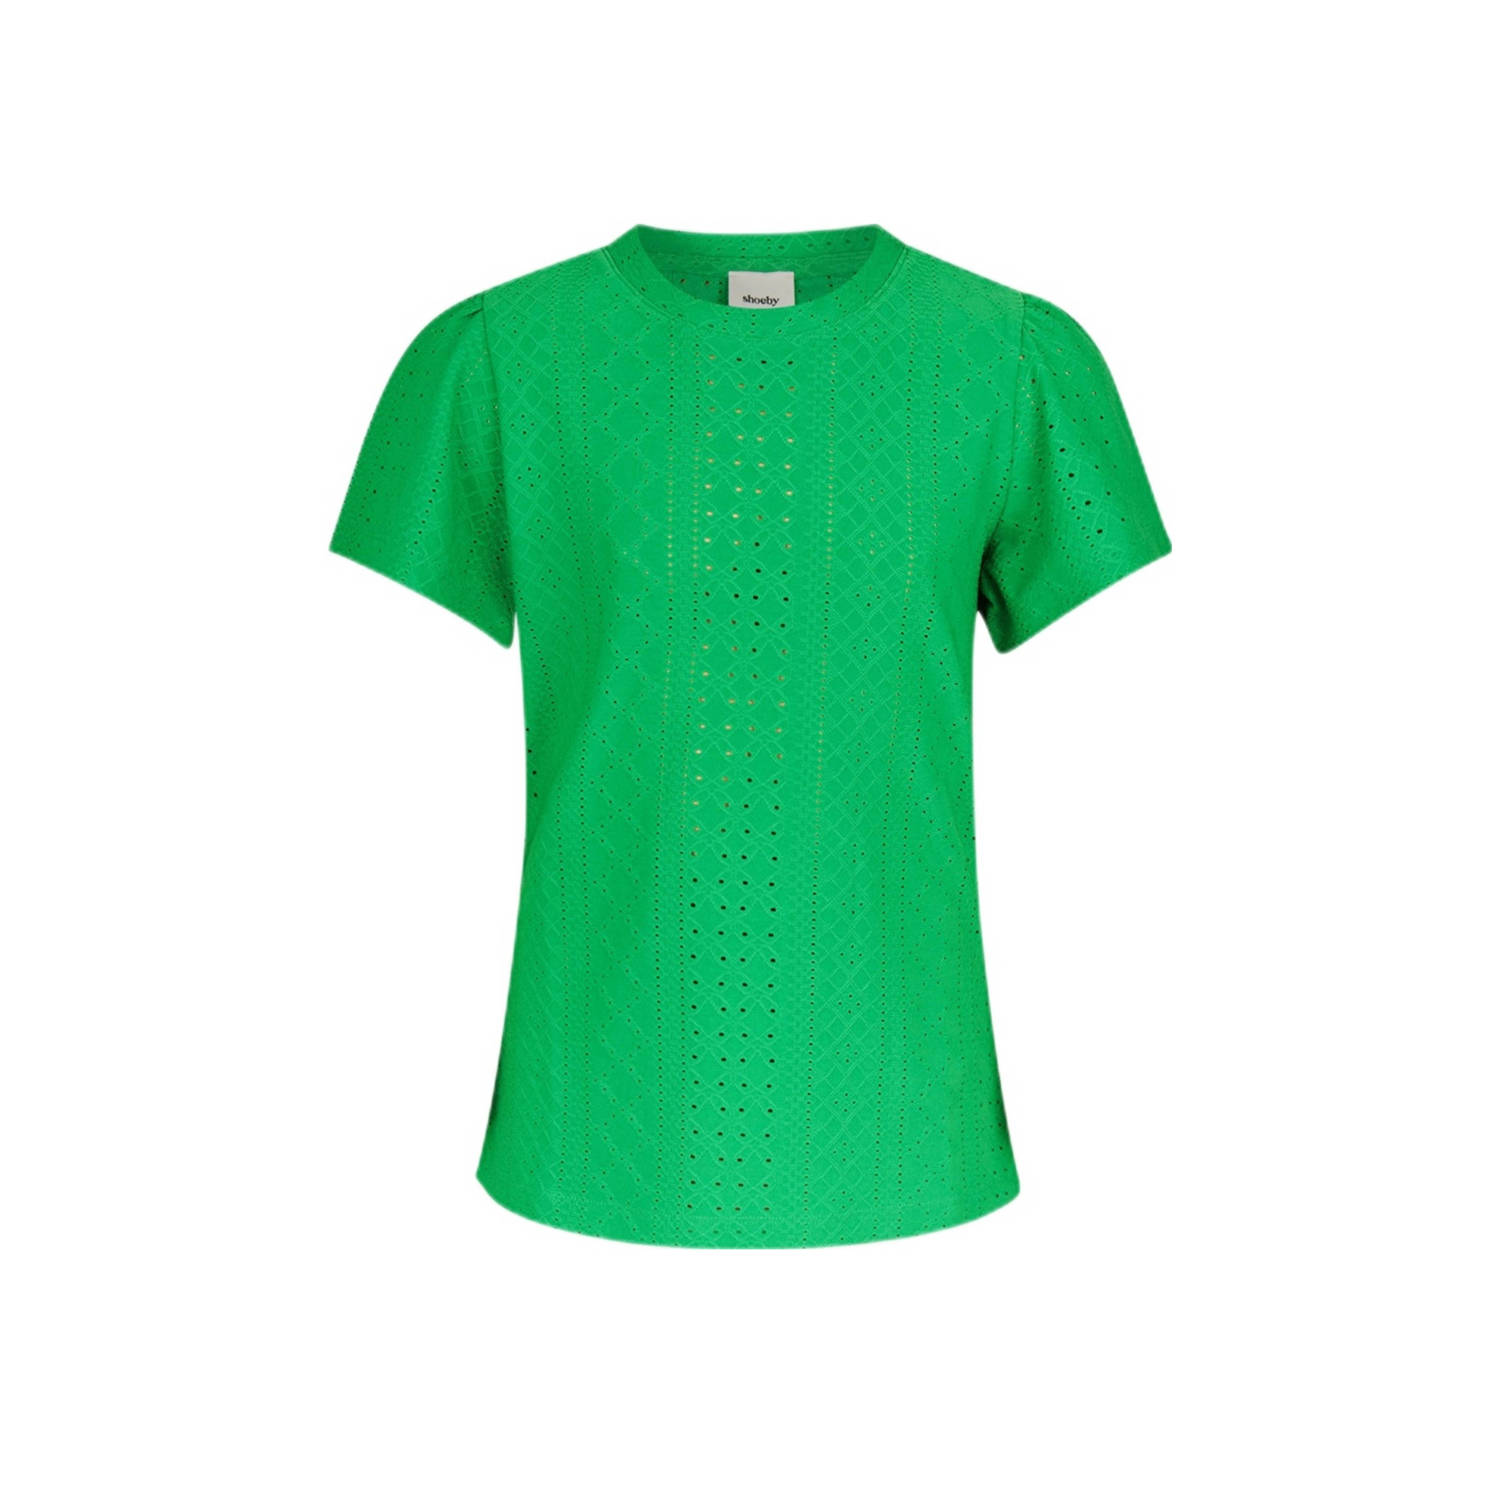 Shoeby T-shirt groen Meisjes Polyester Ronde hals Effen 170 176